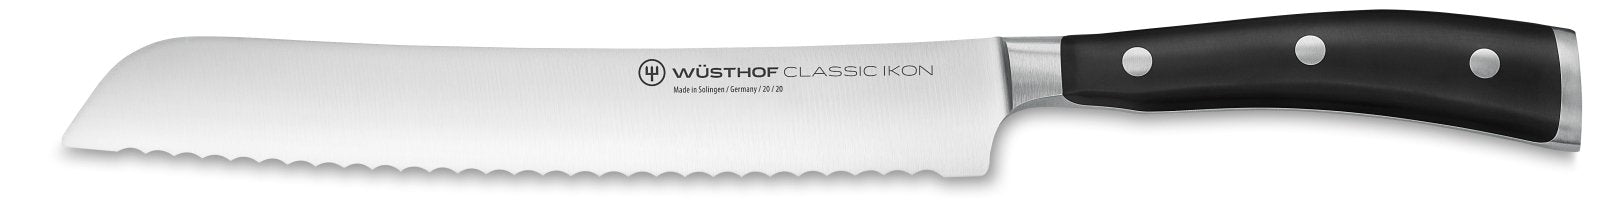 Wusthof Classic IKON Knife Block Set 7 Piece - WT1090370701 - The Cotswold Knife Company